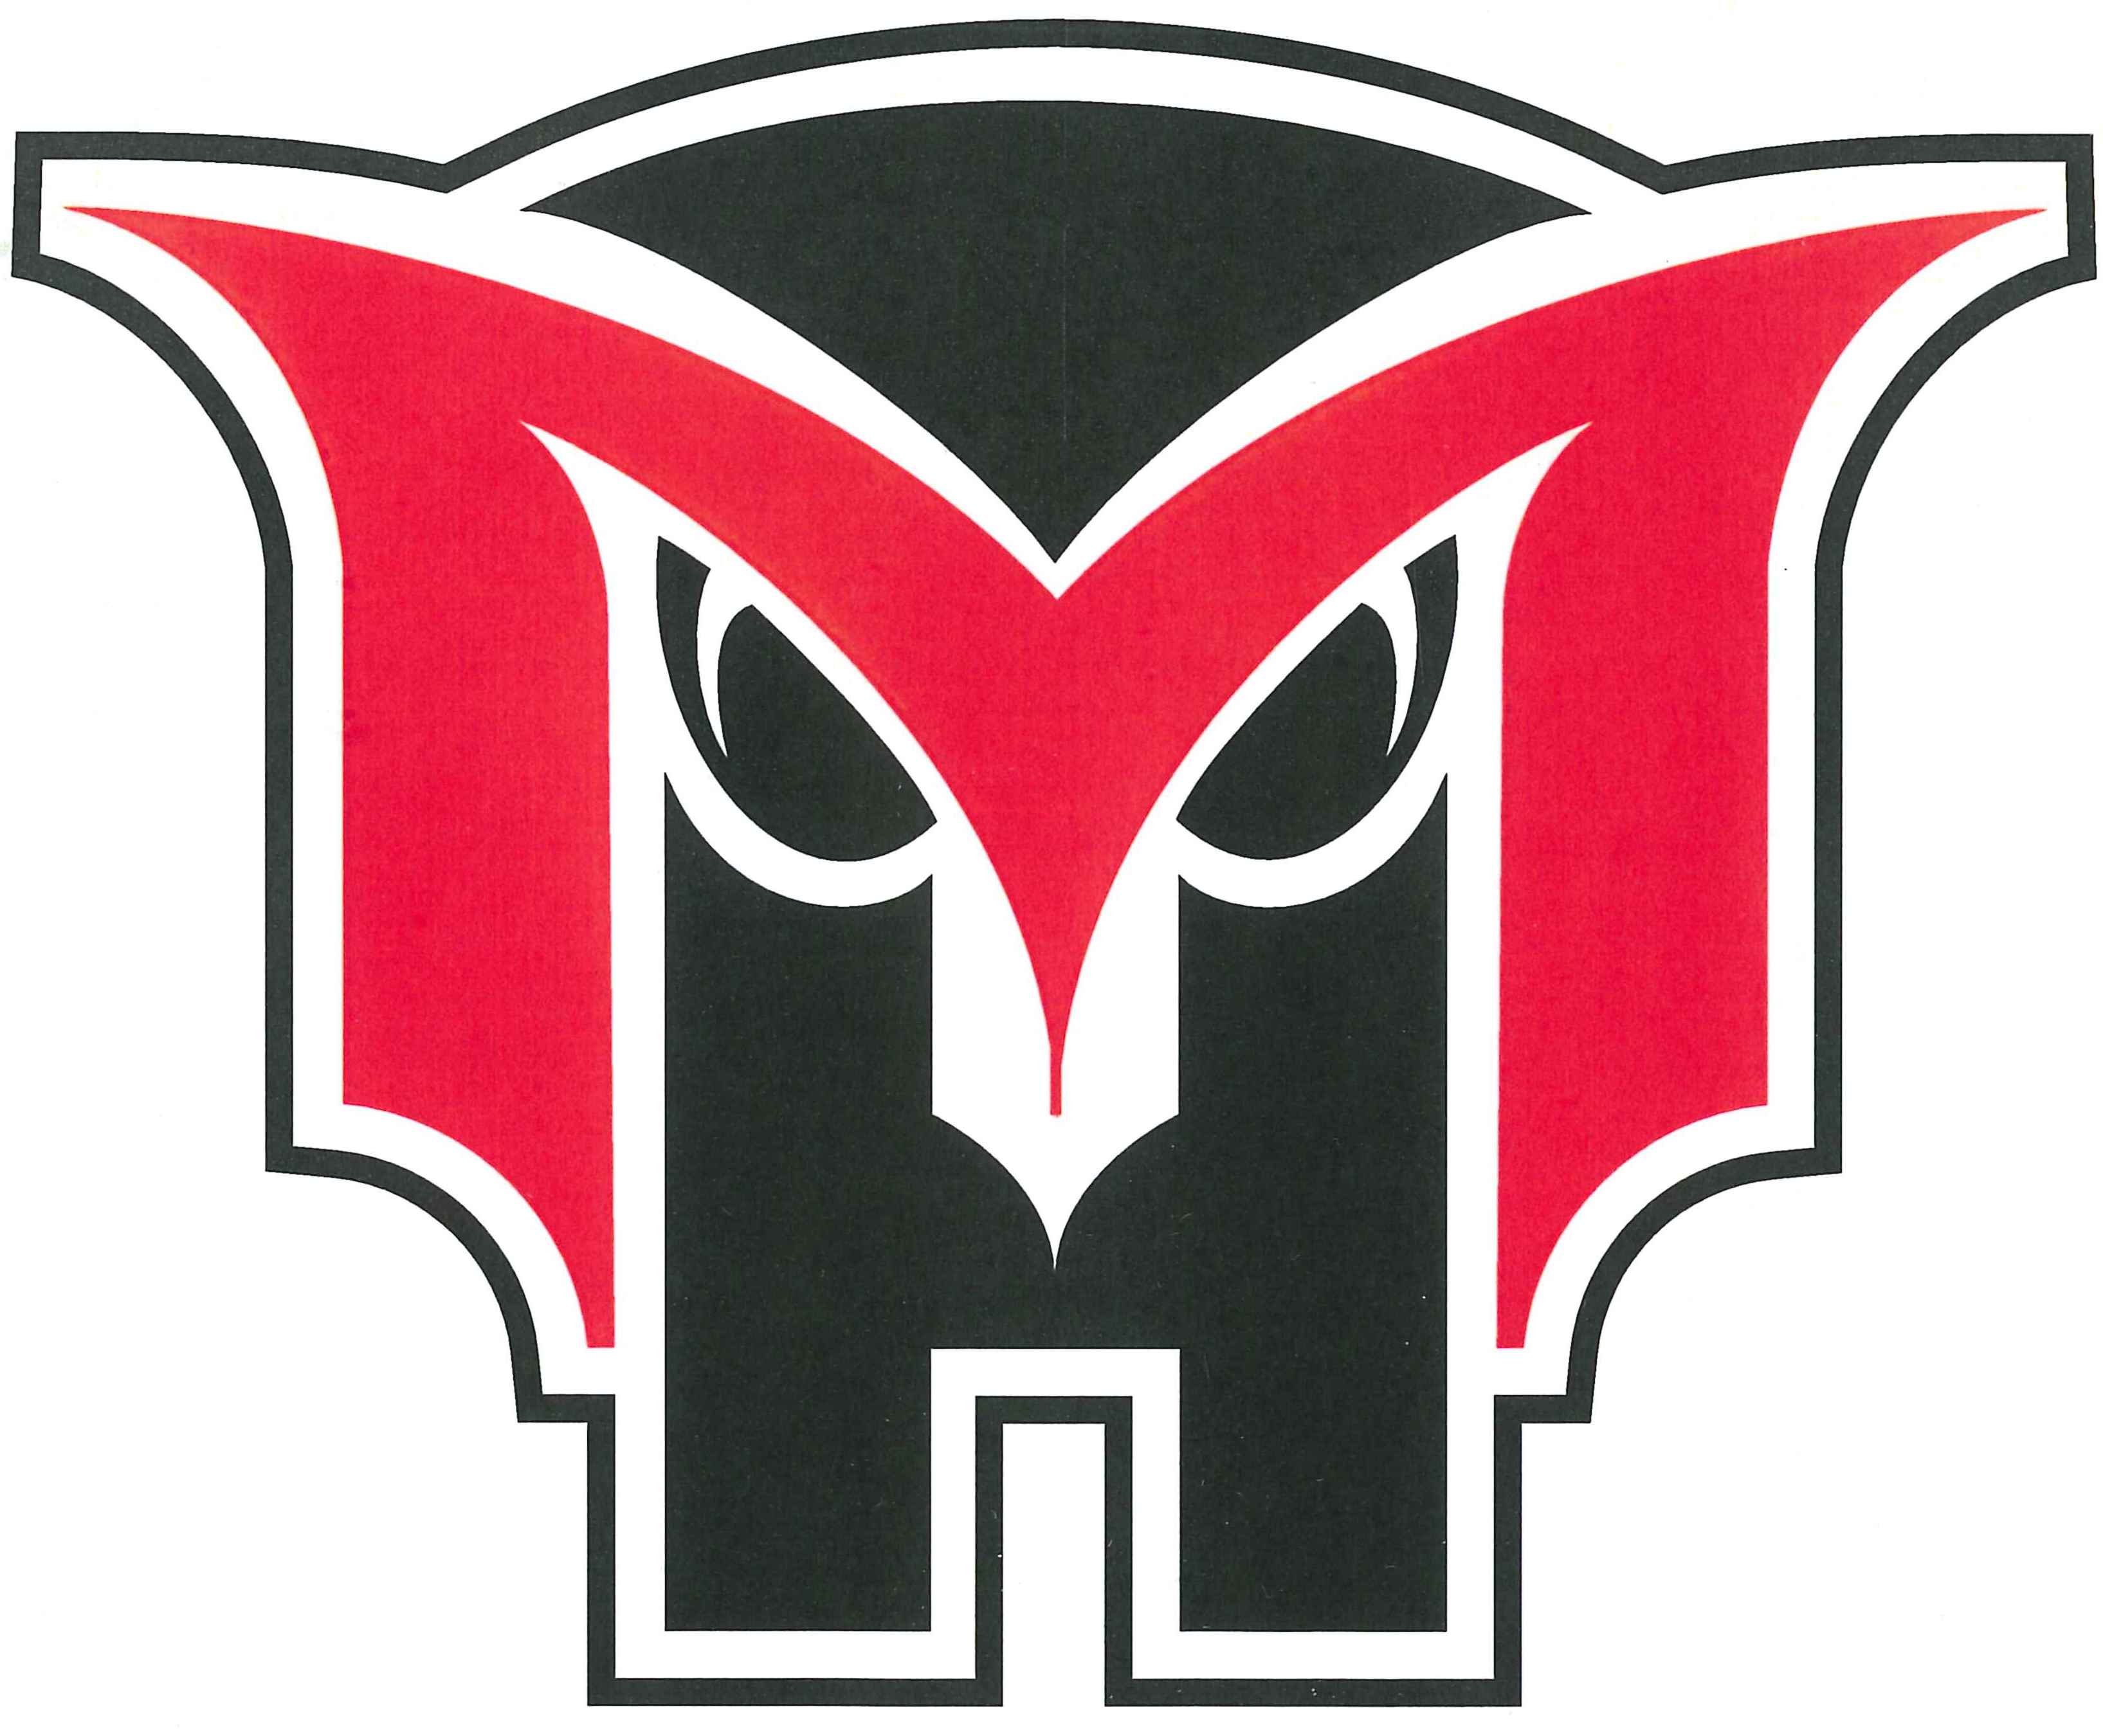 mth logo